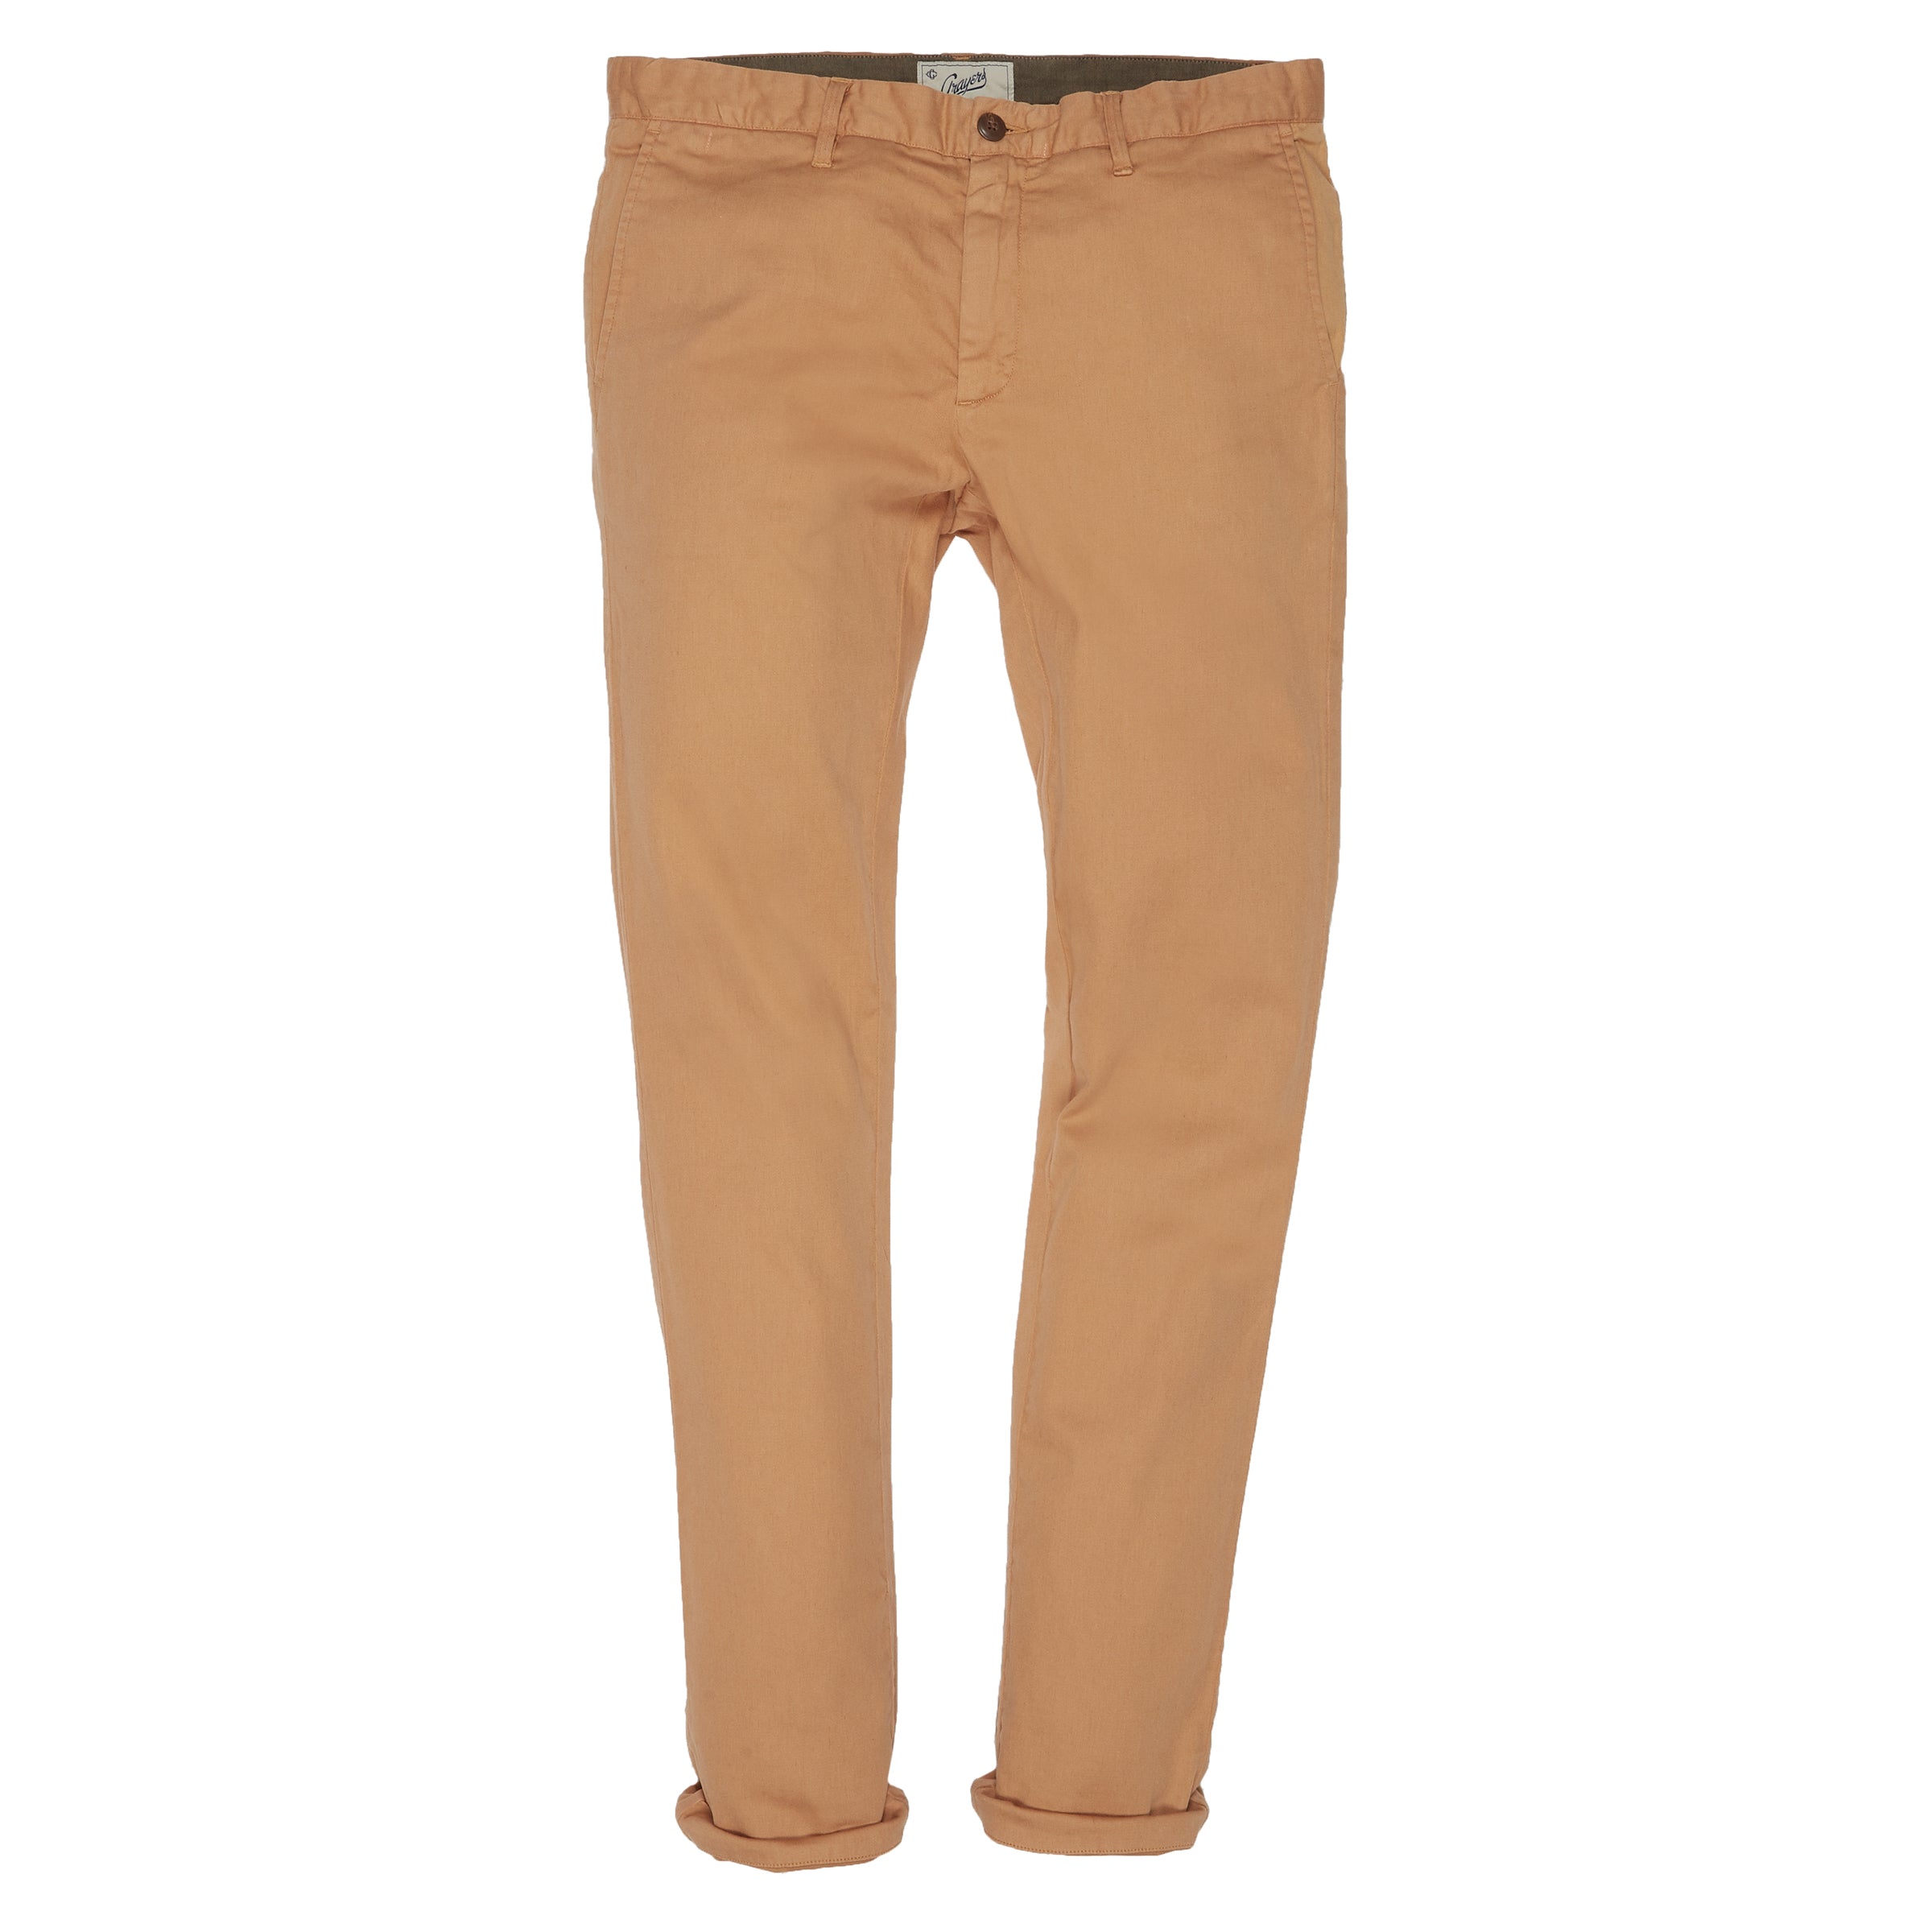 Bermuda Cotton Linen Stretch Slim Fit Pants - Indian Tan (Final Sale)